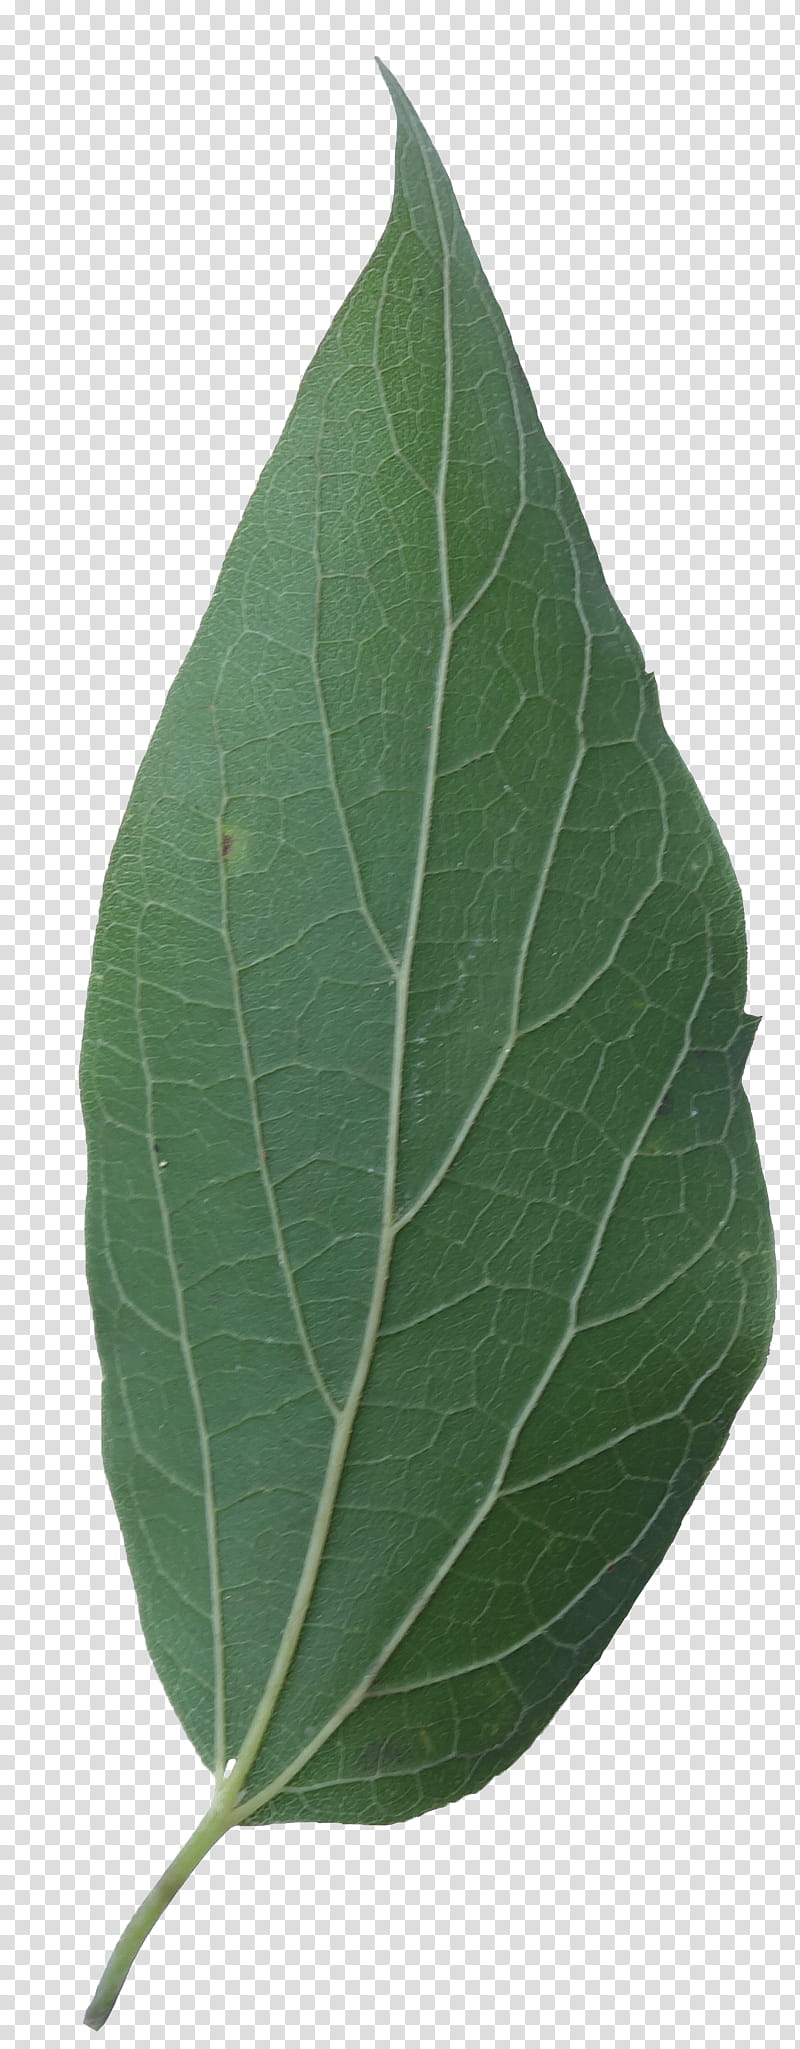 Birch Tree, Leaf, Hackberry, Eastern Cottonwood, Plants, Shrub, Deciduous, River Birch transparent background PNG clipart